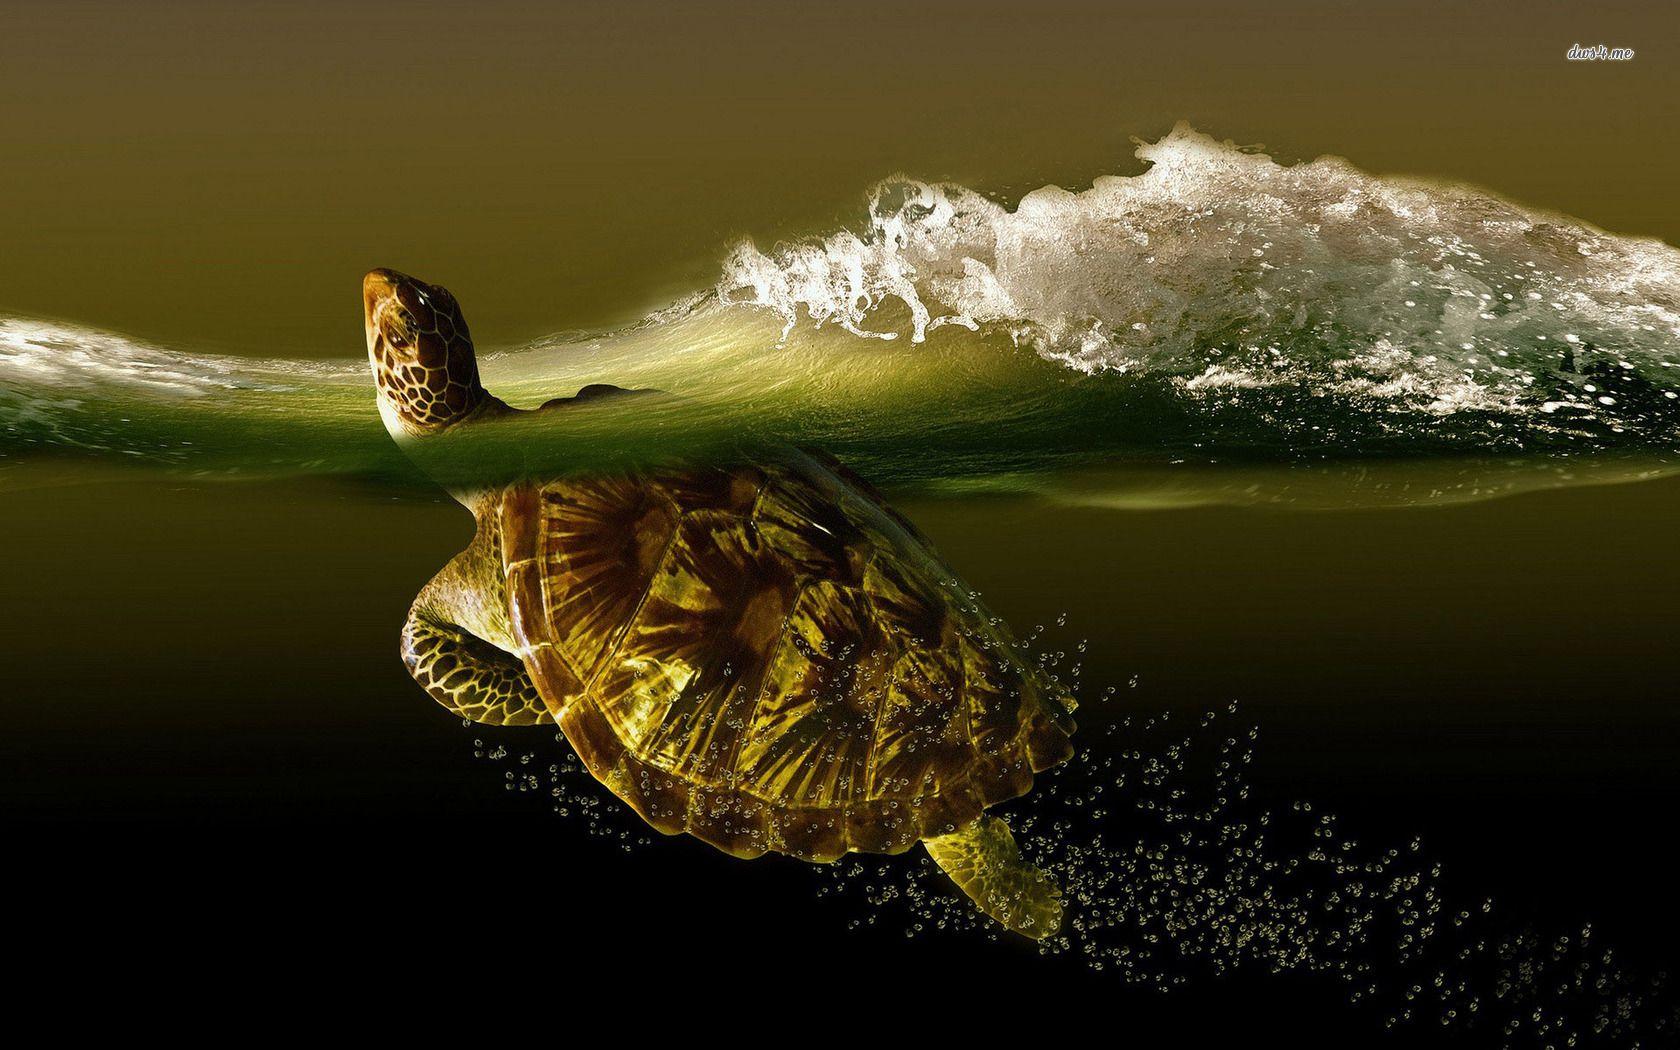 Turtle in the water wallpaper wallpaper